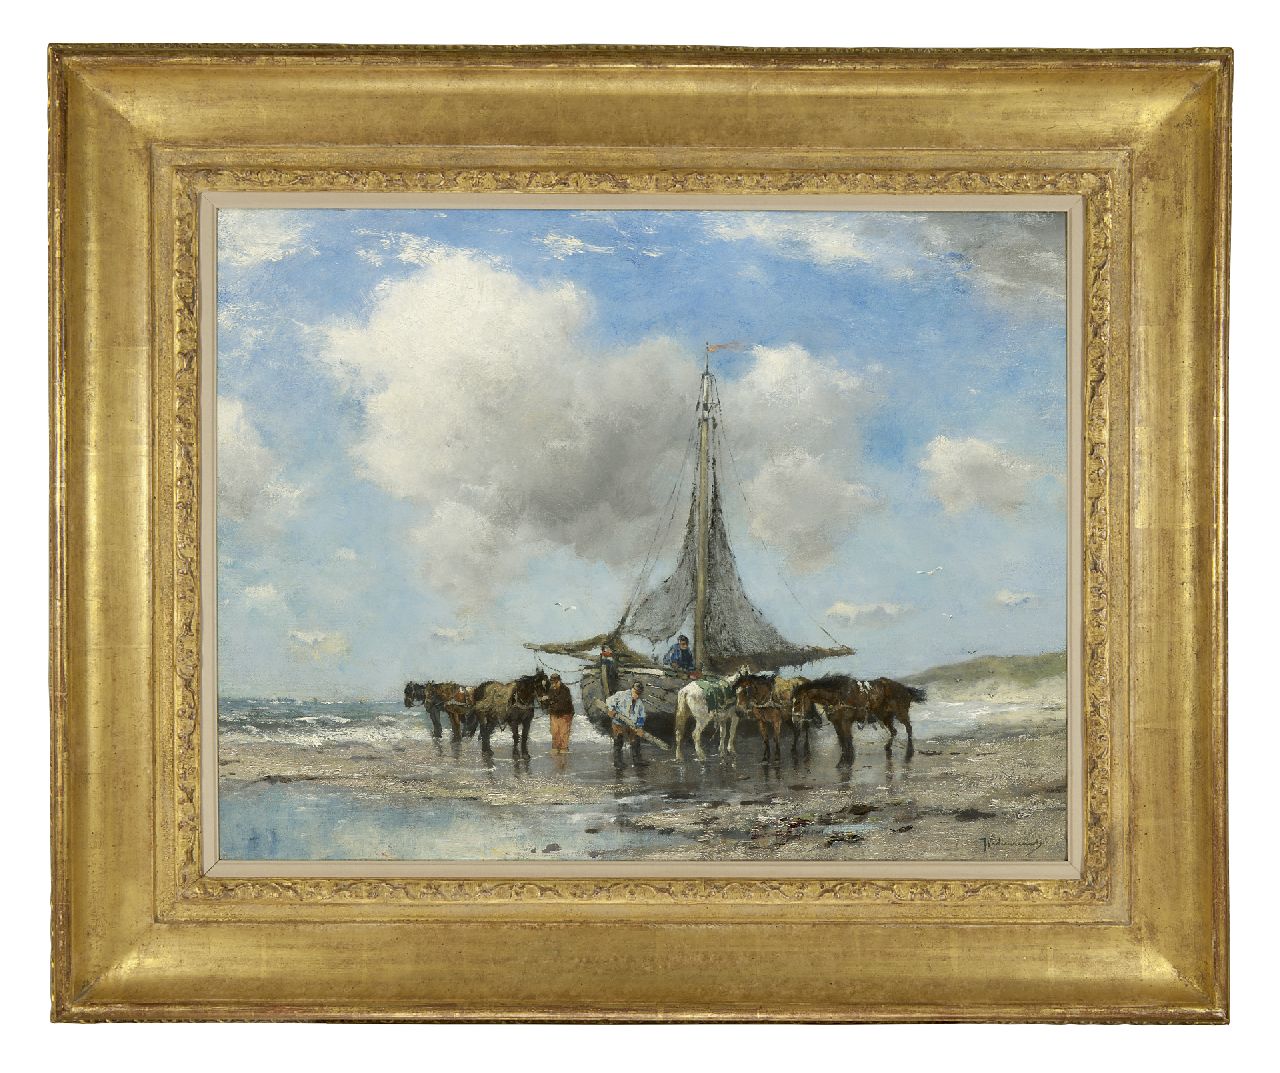 Scherrewitz J.F.C.  | Johan Frederik Cornelis Scherrewitz, Fishermanpink and draft horses on the beach, oil on canvas 50.8 x 66.1 cm, signed l.r.